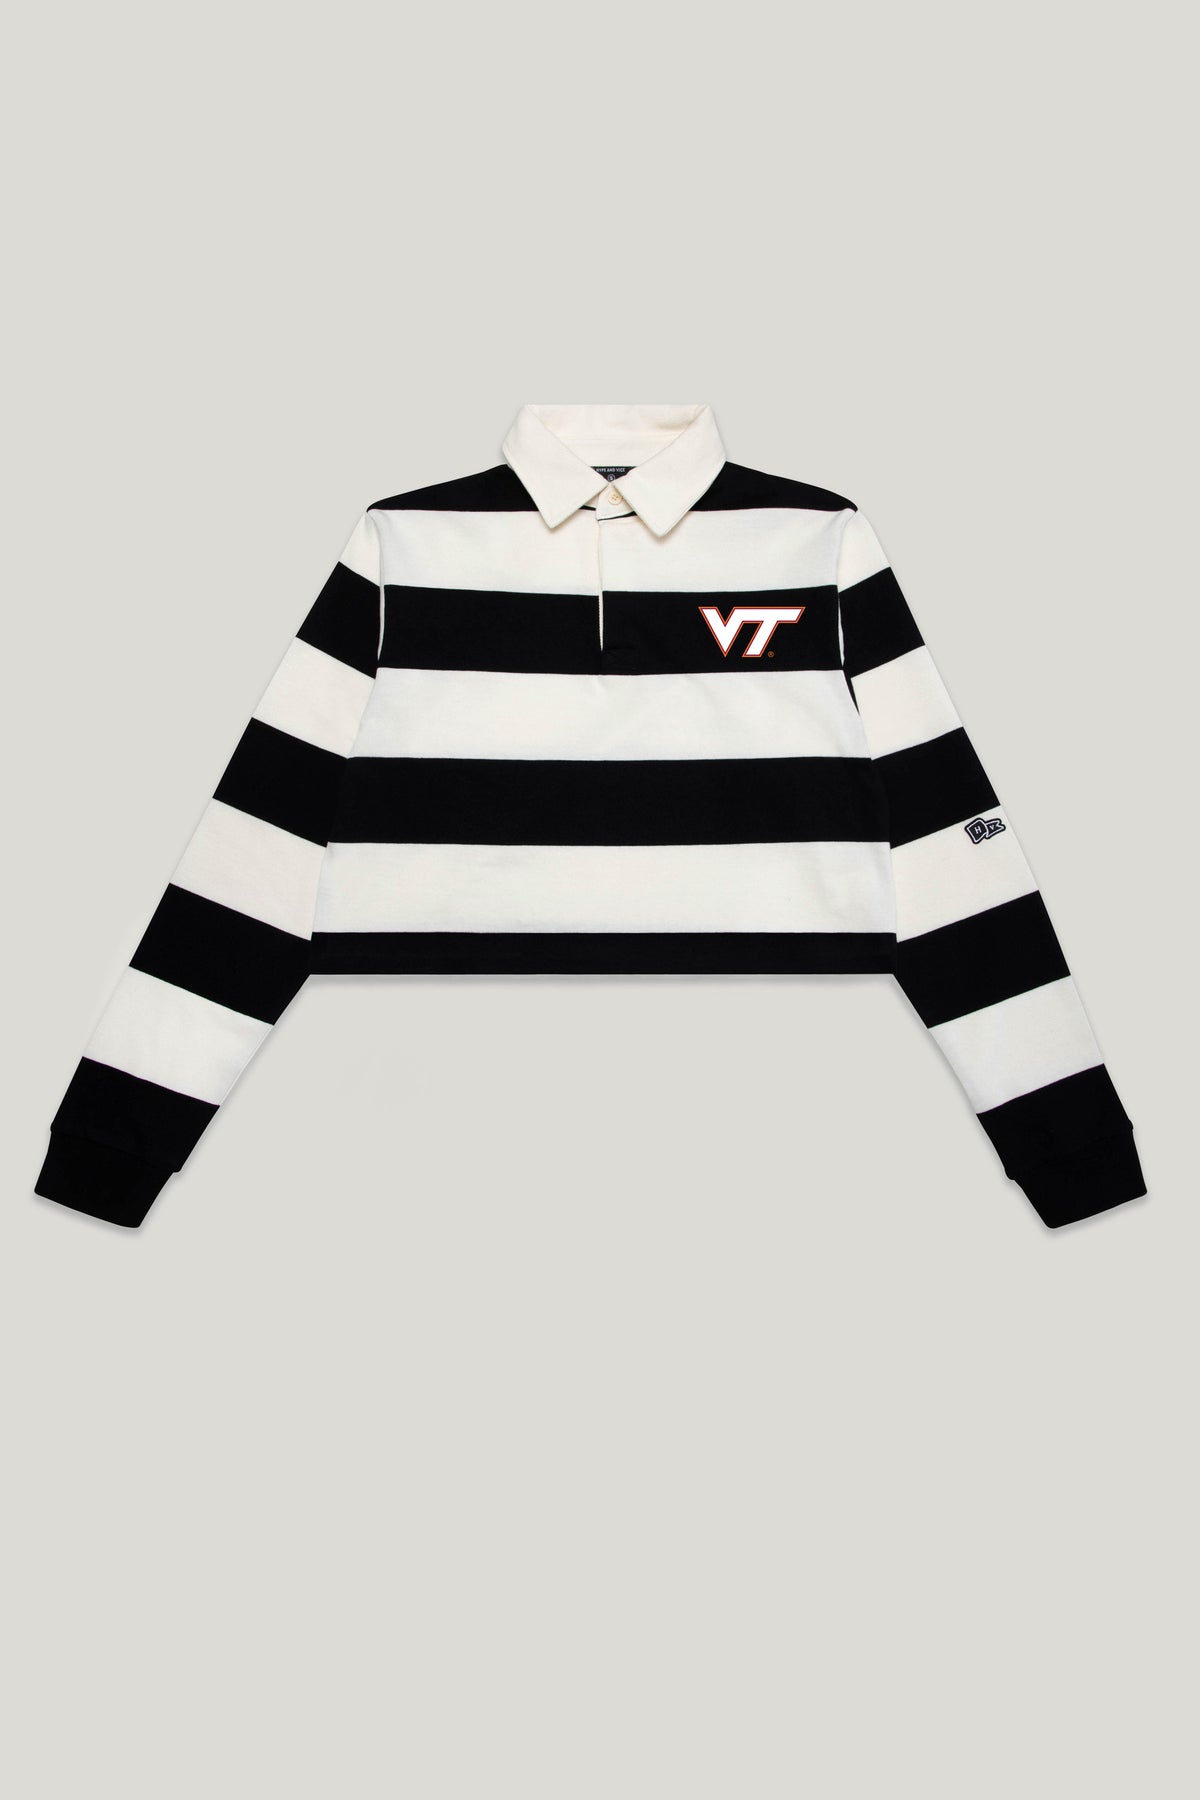 Virginia Tech Rugby Top